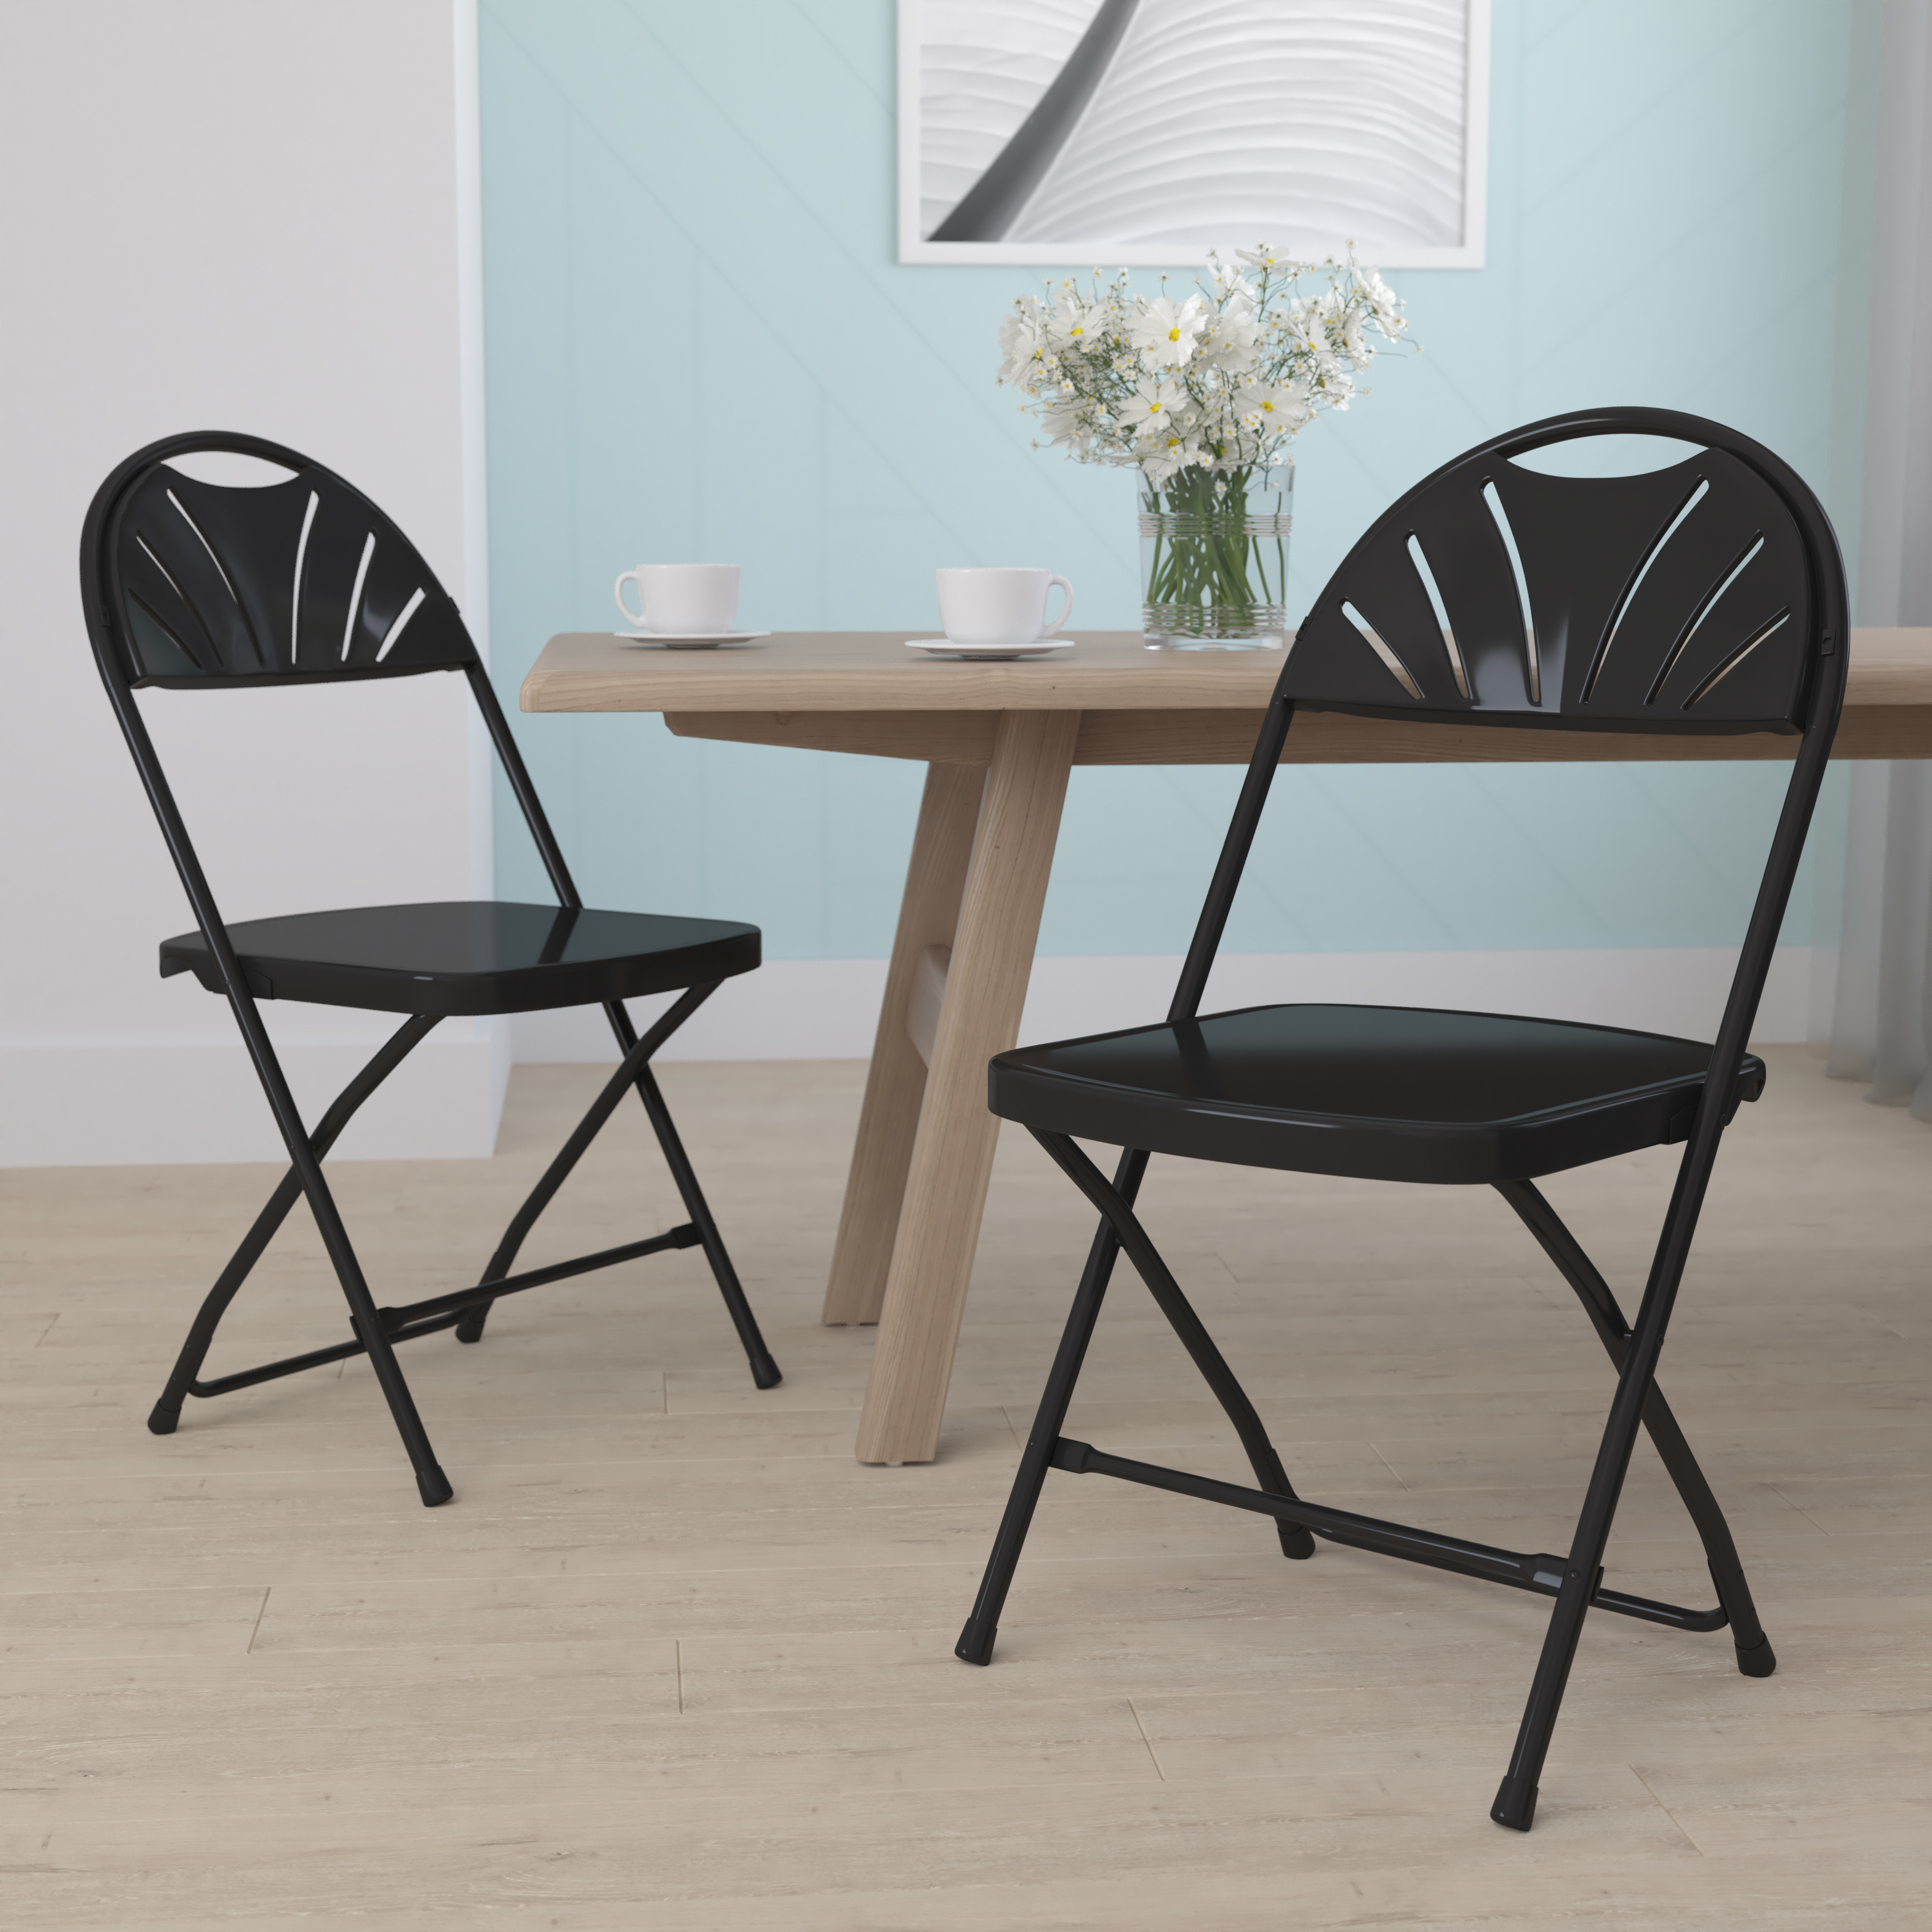 Flash Furniture Steel Folding Chair (2 Pack), Black - image 1 of 14